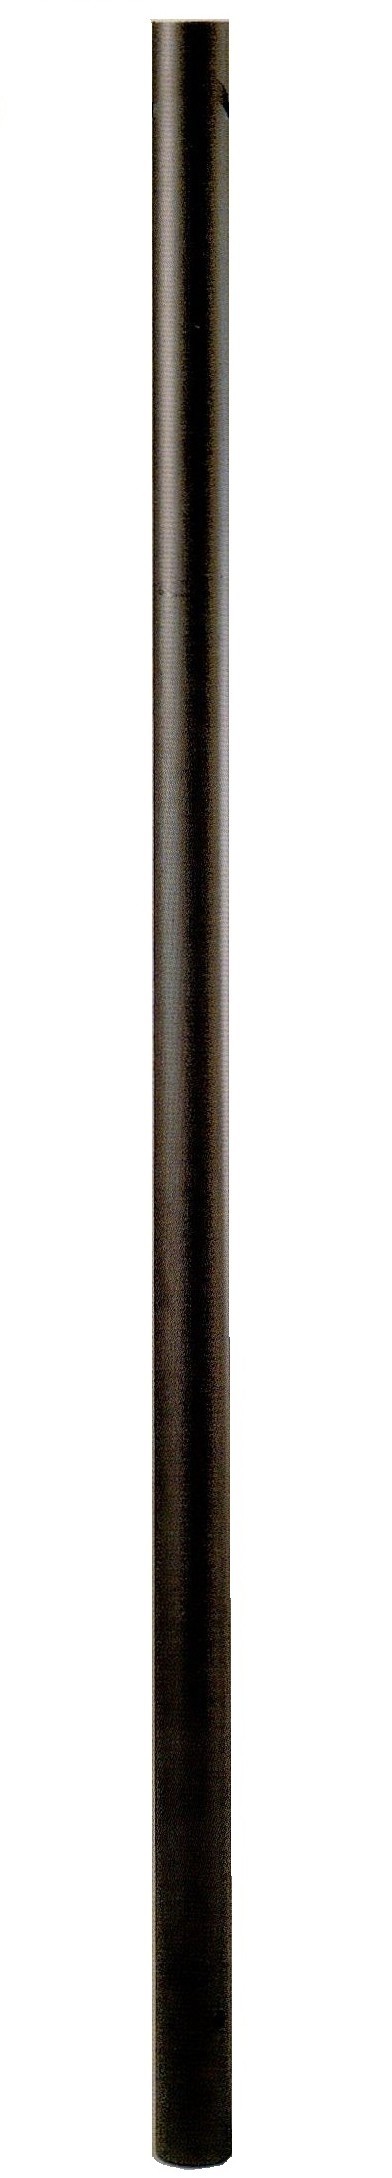 ZBP 10 foot 3" Diameter Cast Aluminum Direct Burial Pole 